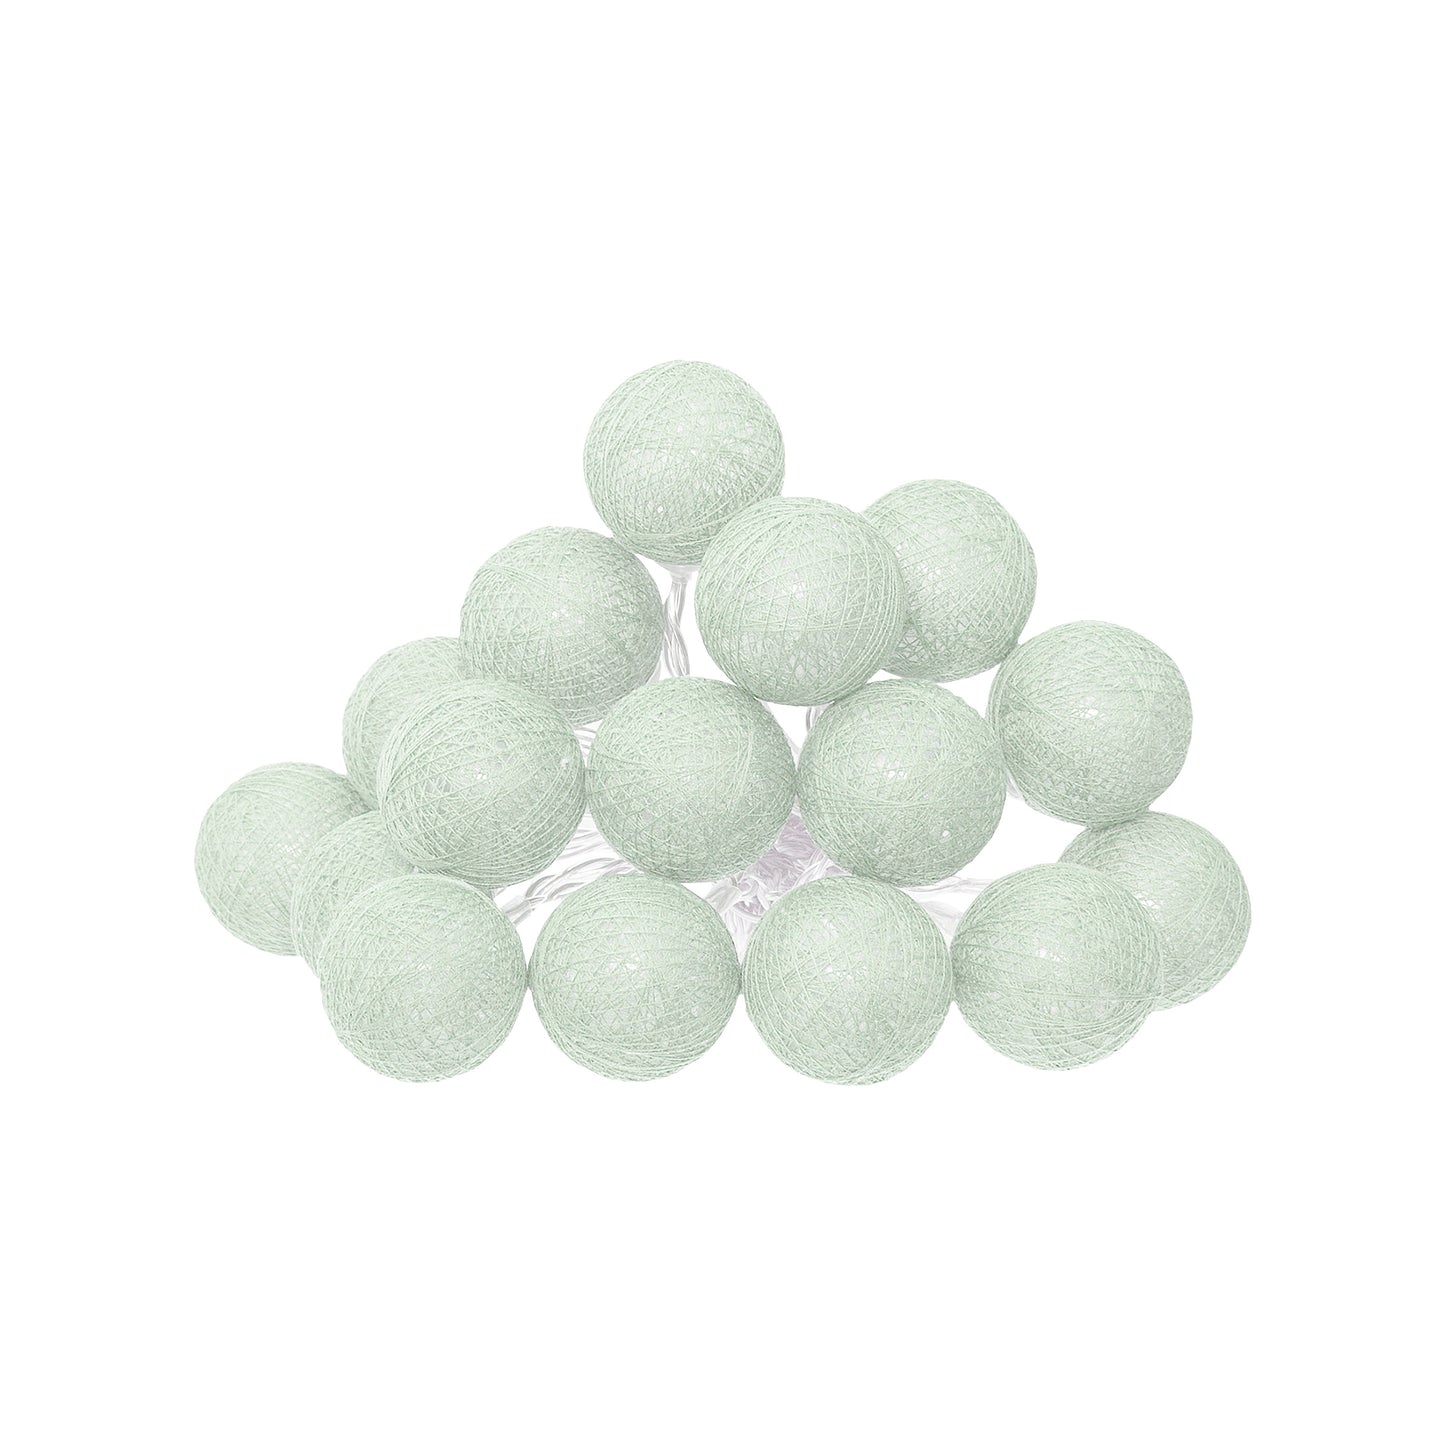 Atmosphera LED Feestverlichting Land balletjes Celadon groen- Lichtslingers katoen - Cotton ball - 16 Ballen - Dia 3.5 cm - Guirlande